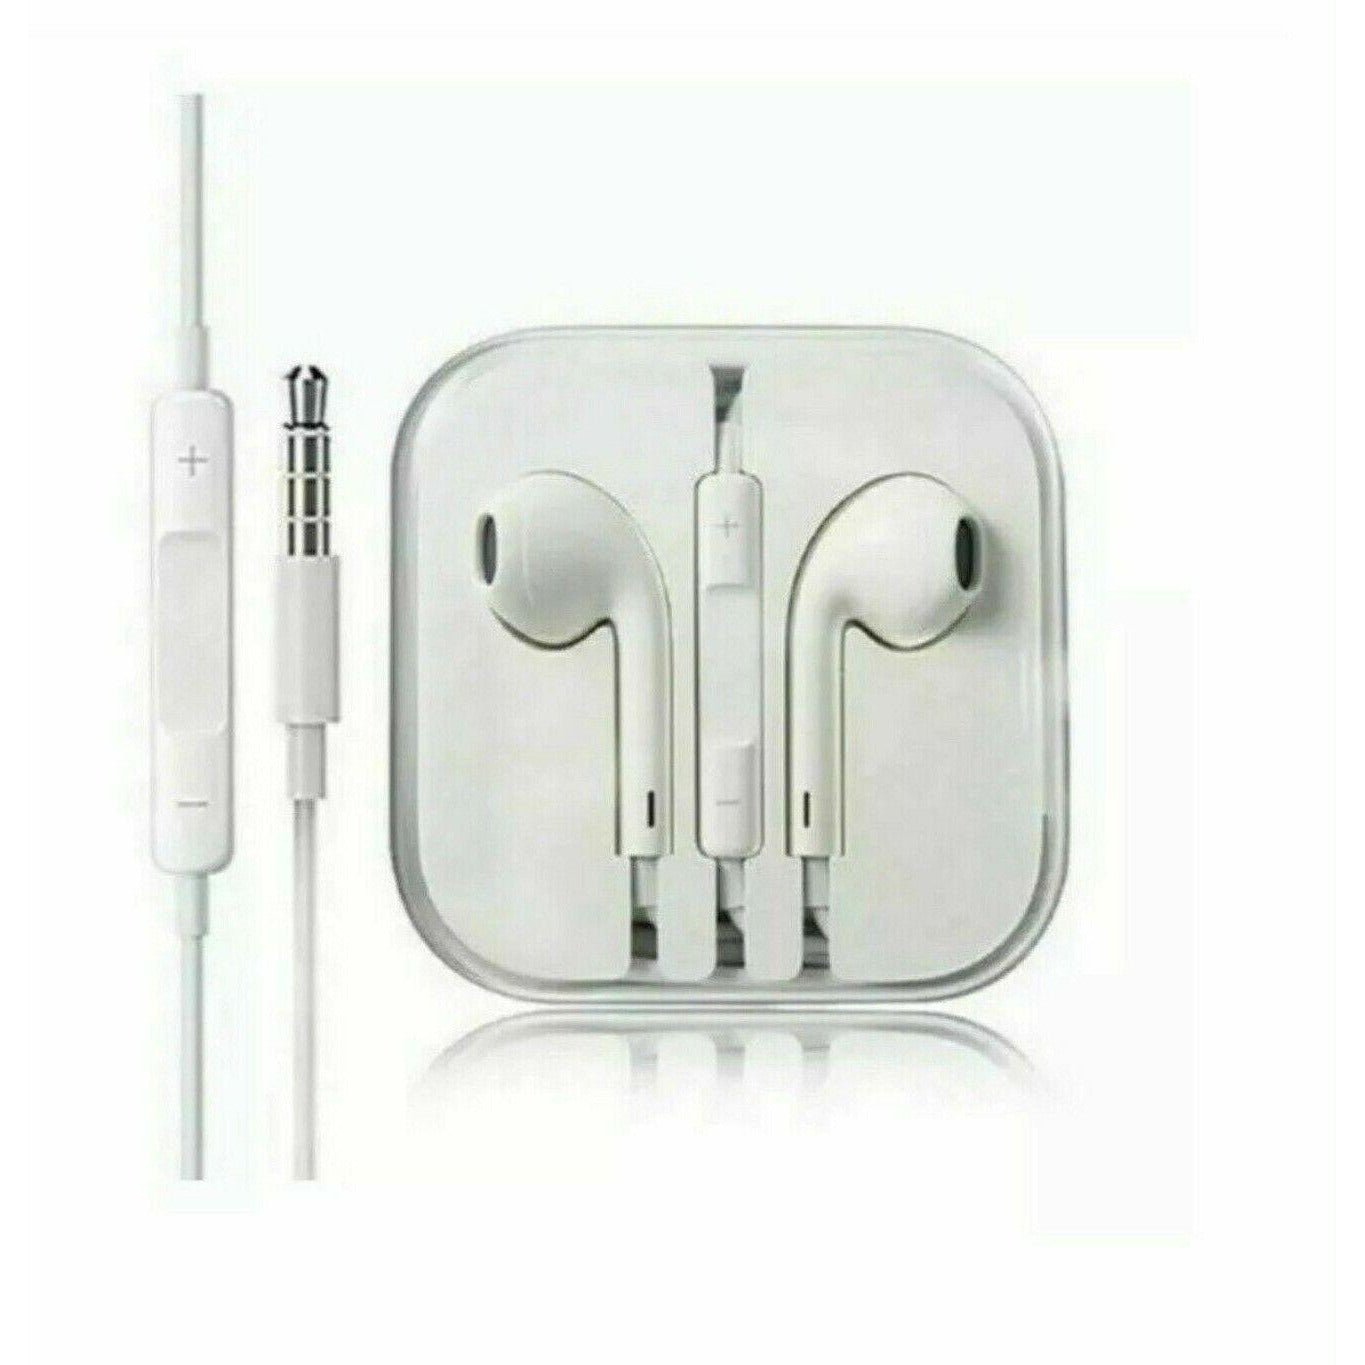 Wired Handsfree Headphones Earphones Earbud with Mic Mobile Phone iPhone Samsung